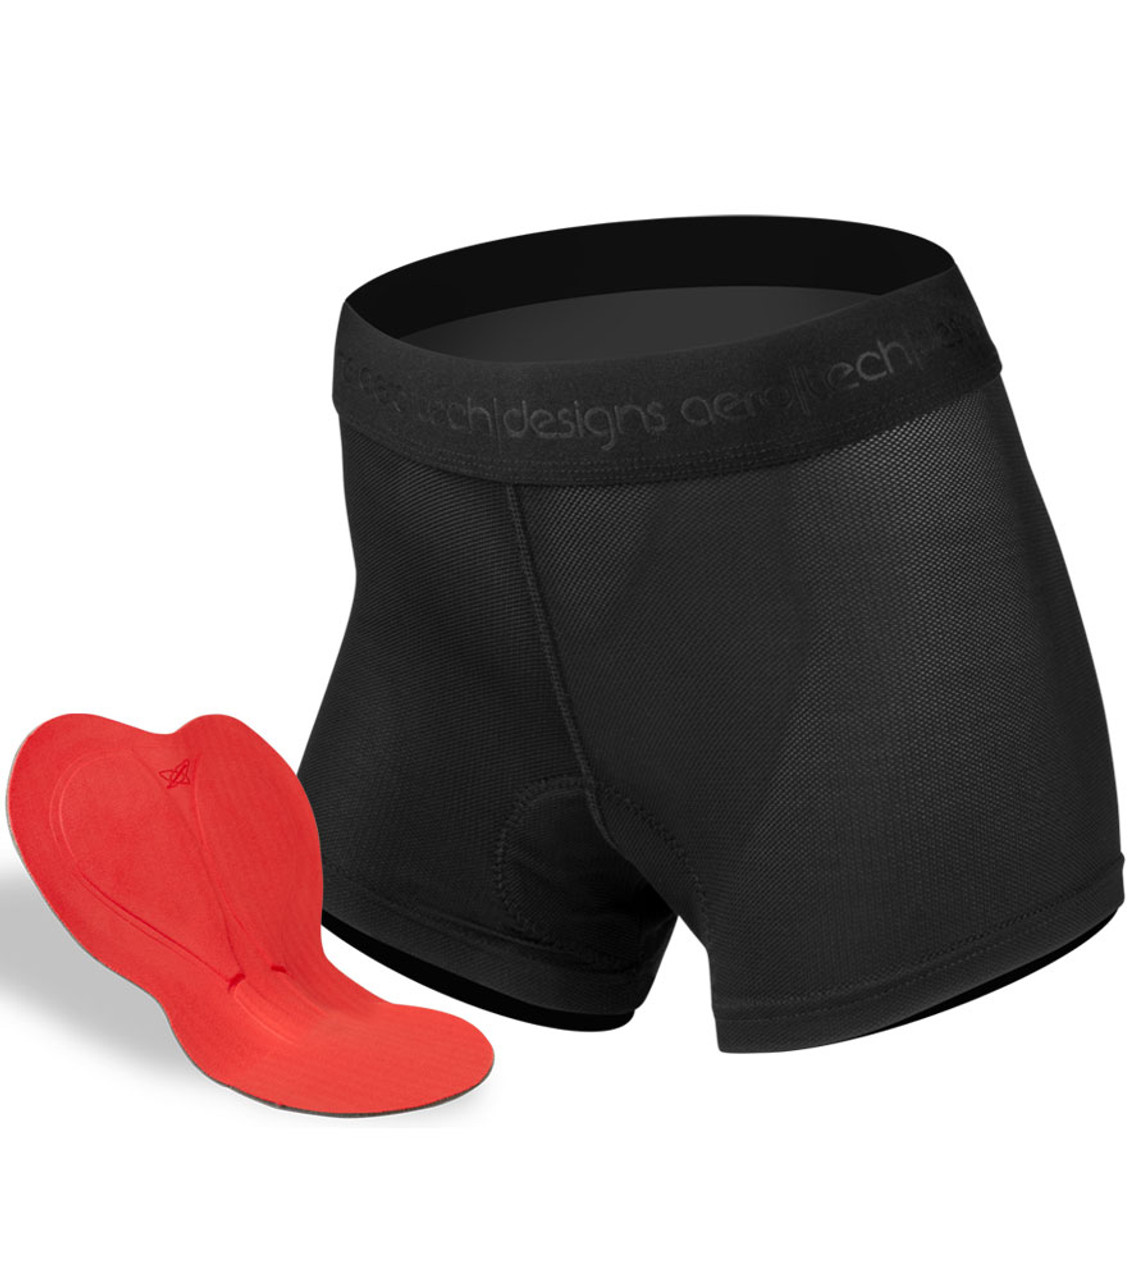 Women's OCG Soft Mesh Gel Padded Cycling Underwear Undershorts